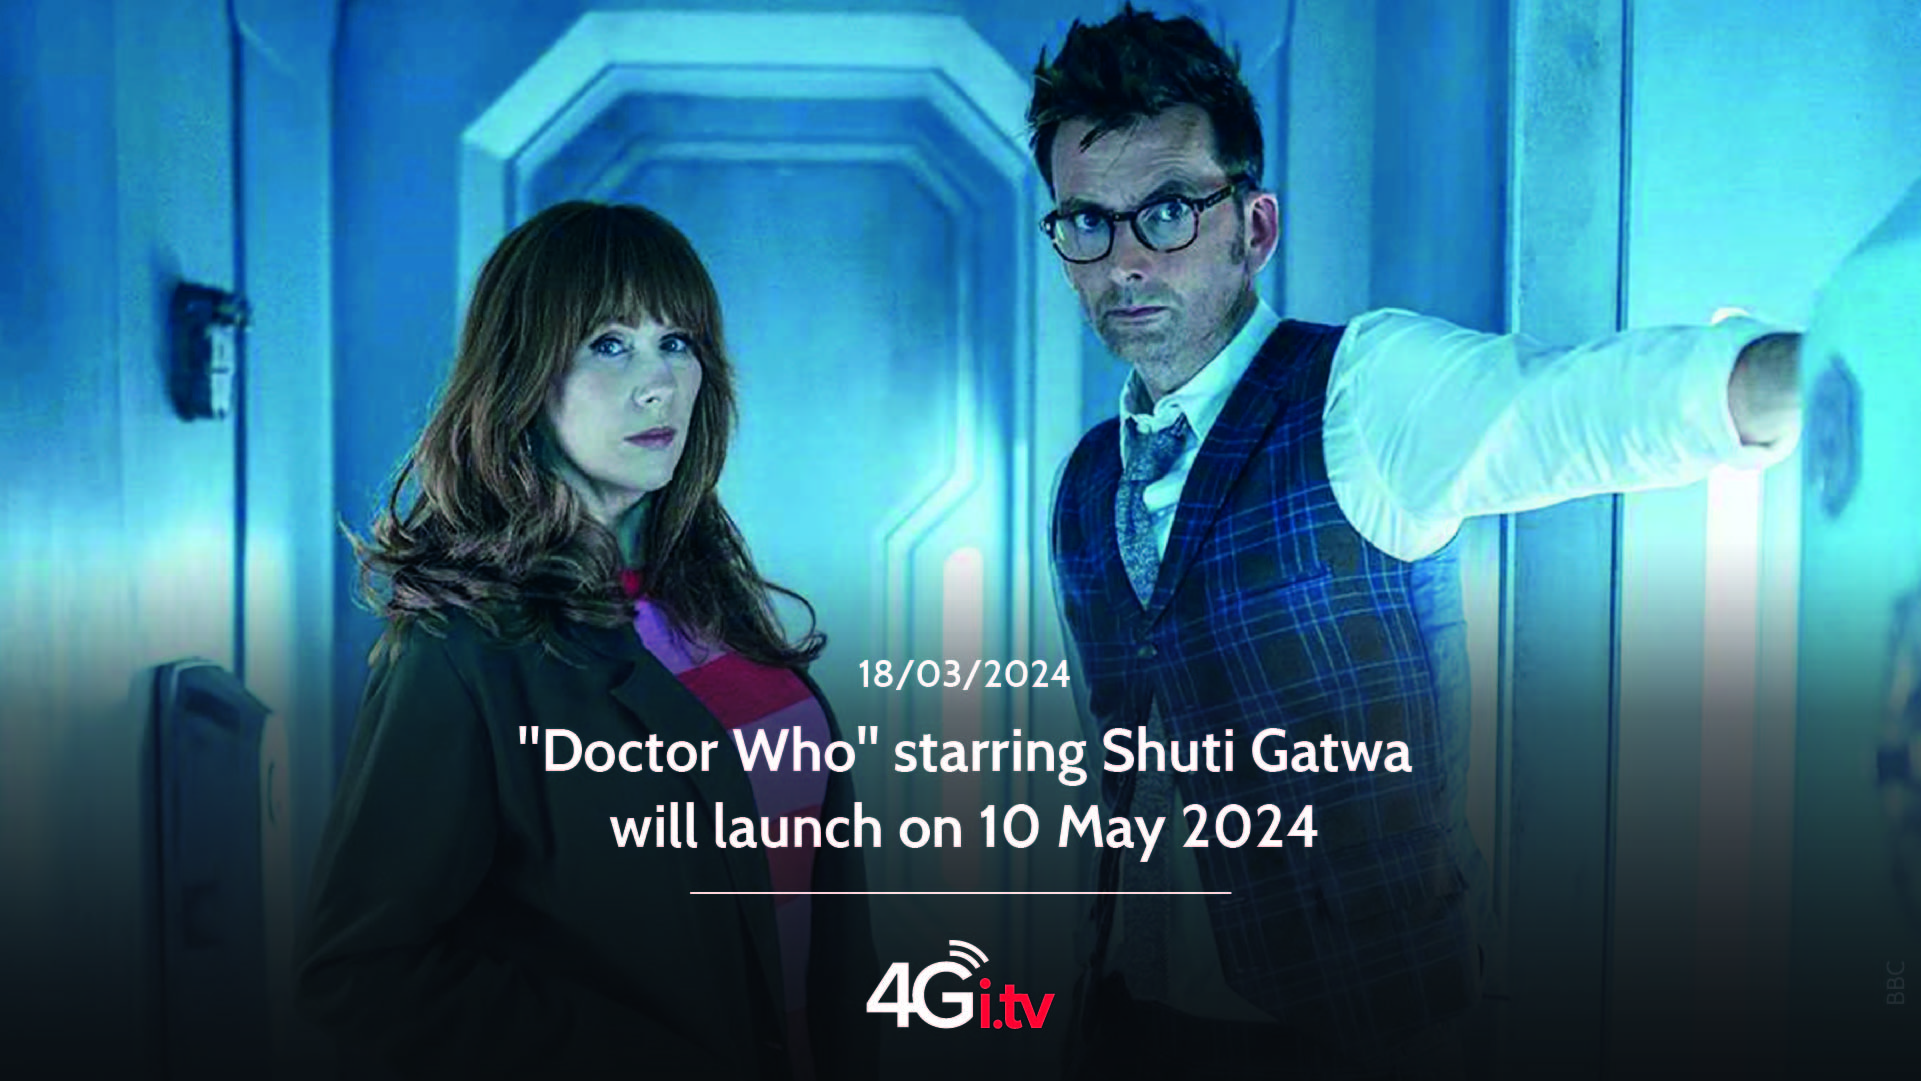 Подробнее о статье “Doctor Who” starring Shuti Gatwa will launch on 10 May 2024